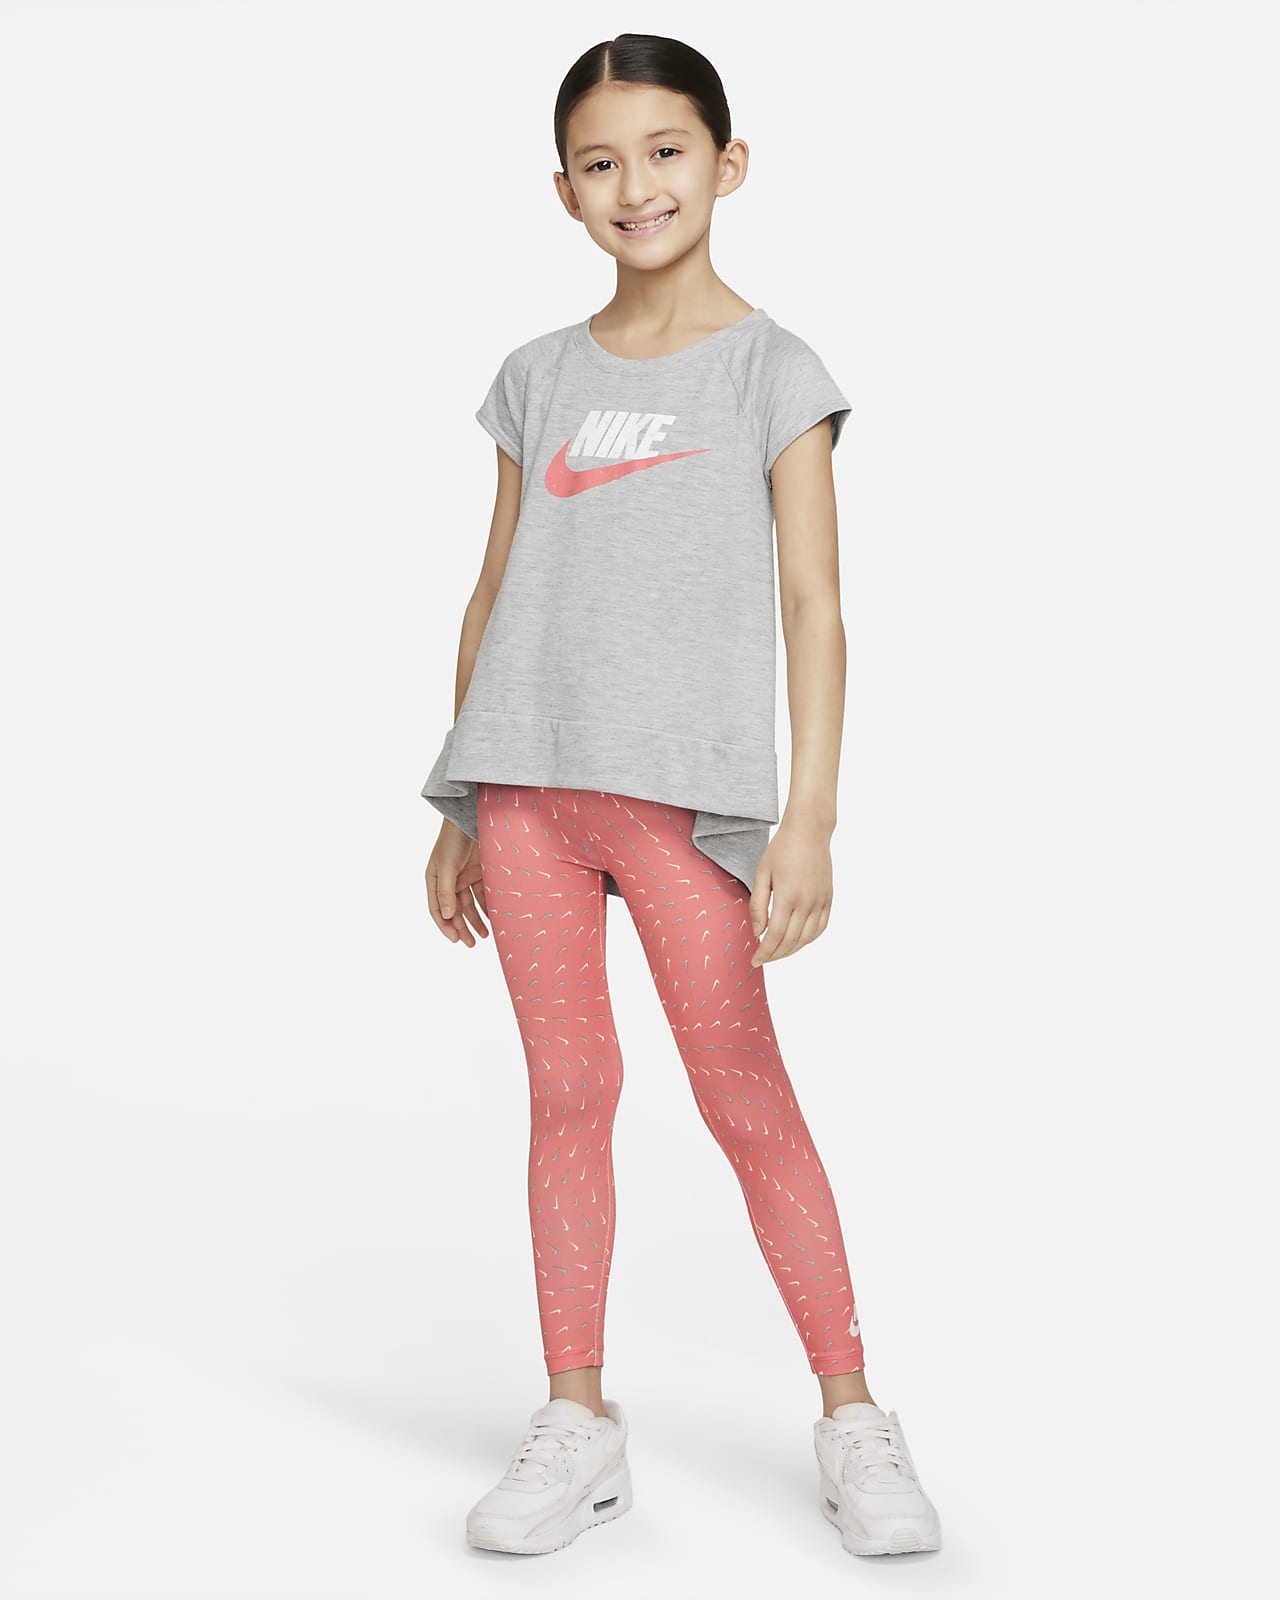 Little Kids' T-Shirt and Set. Nike.com